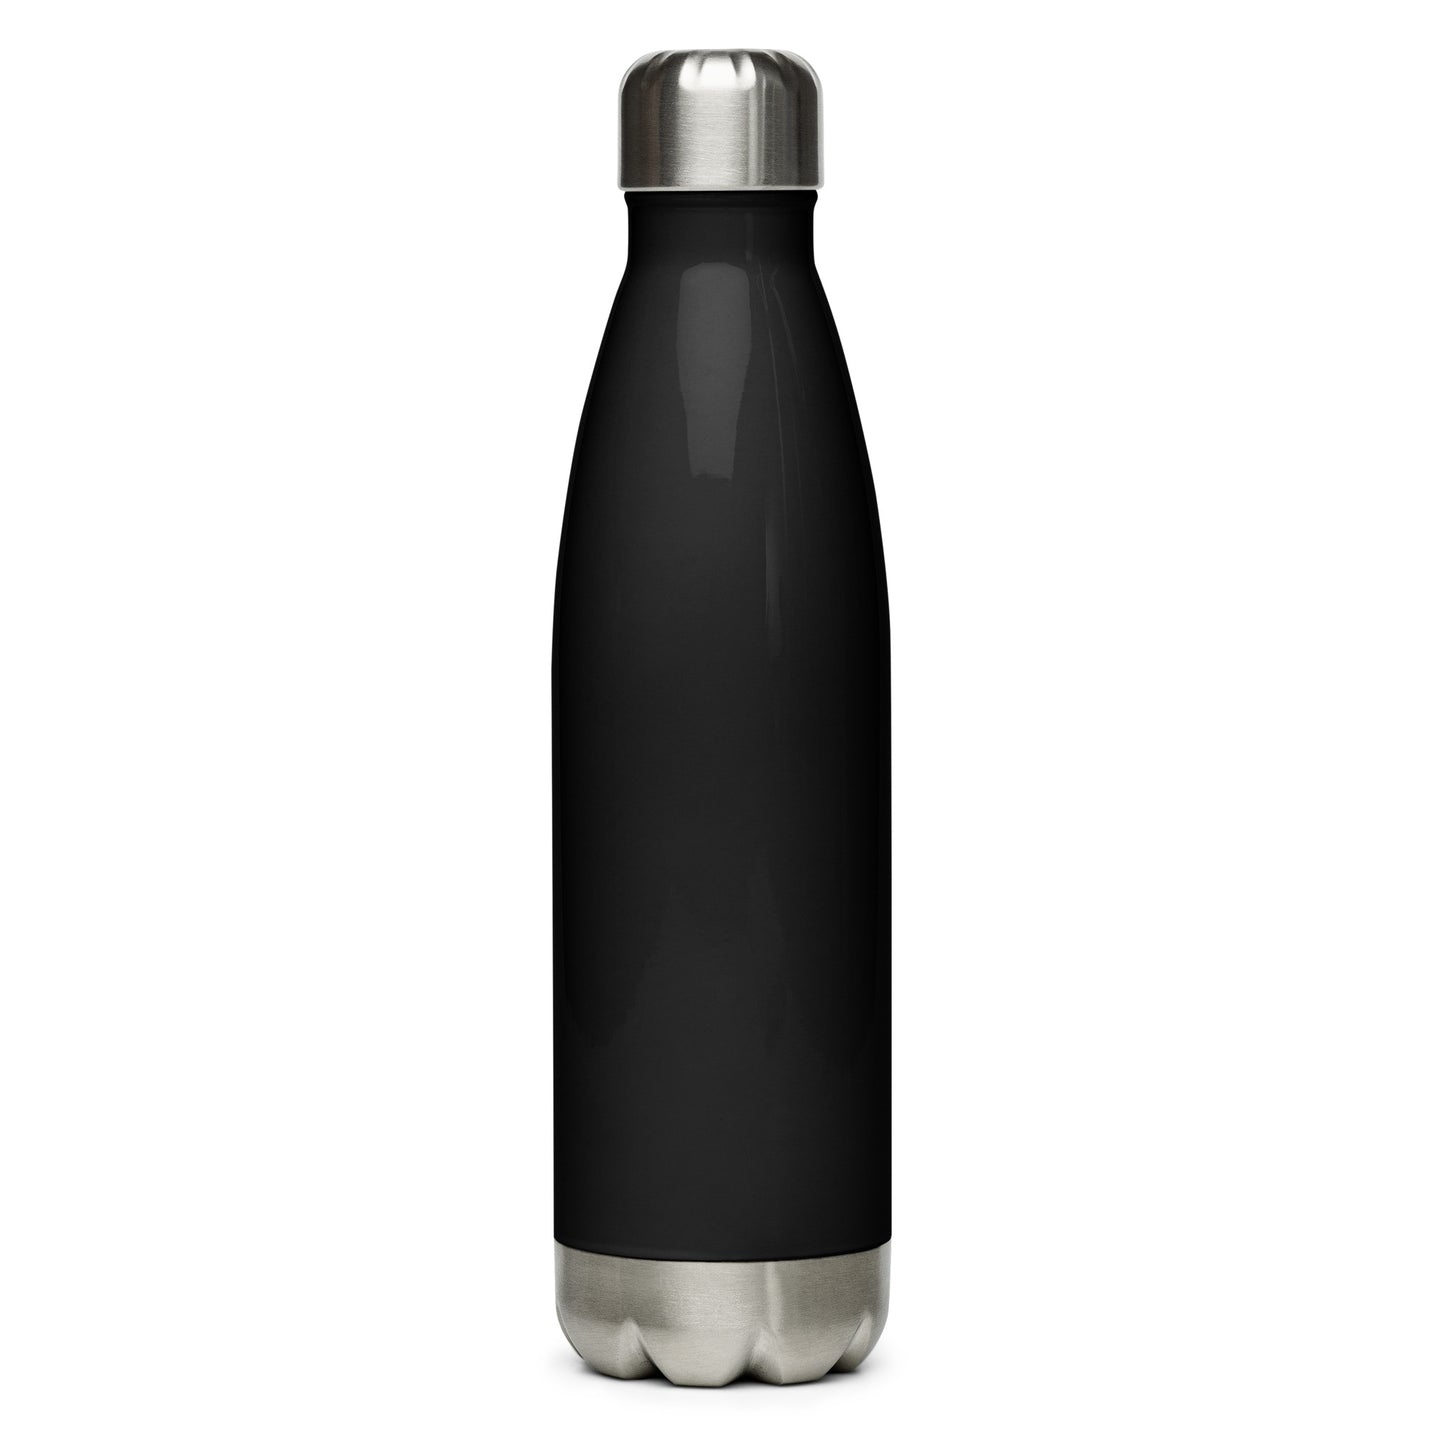 Turbo King Stainless Steel Water Bottle